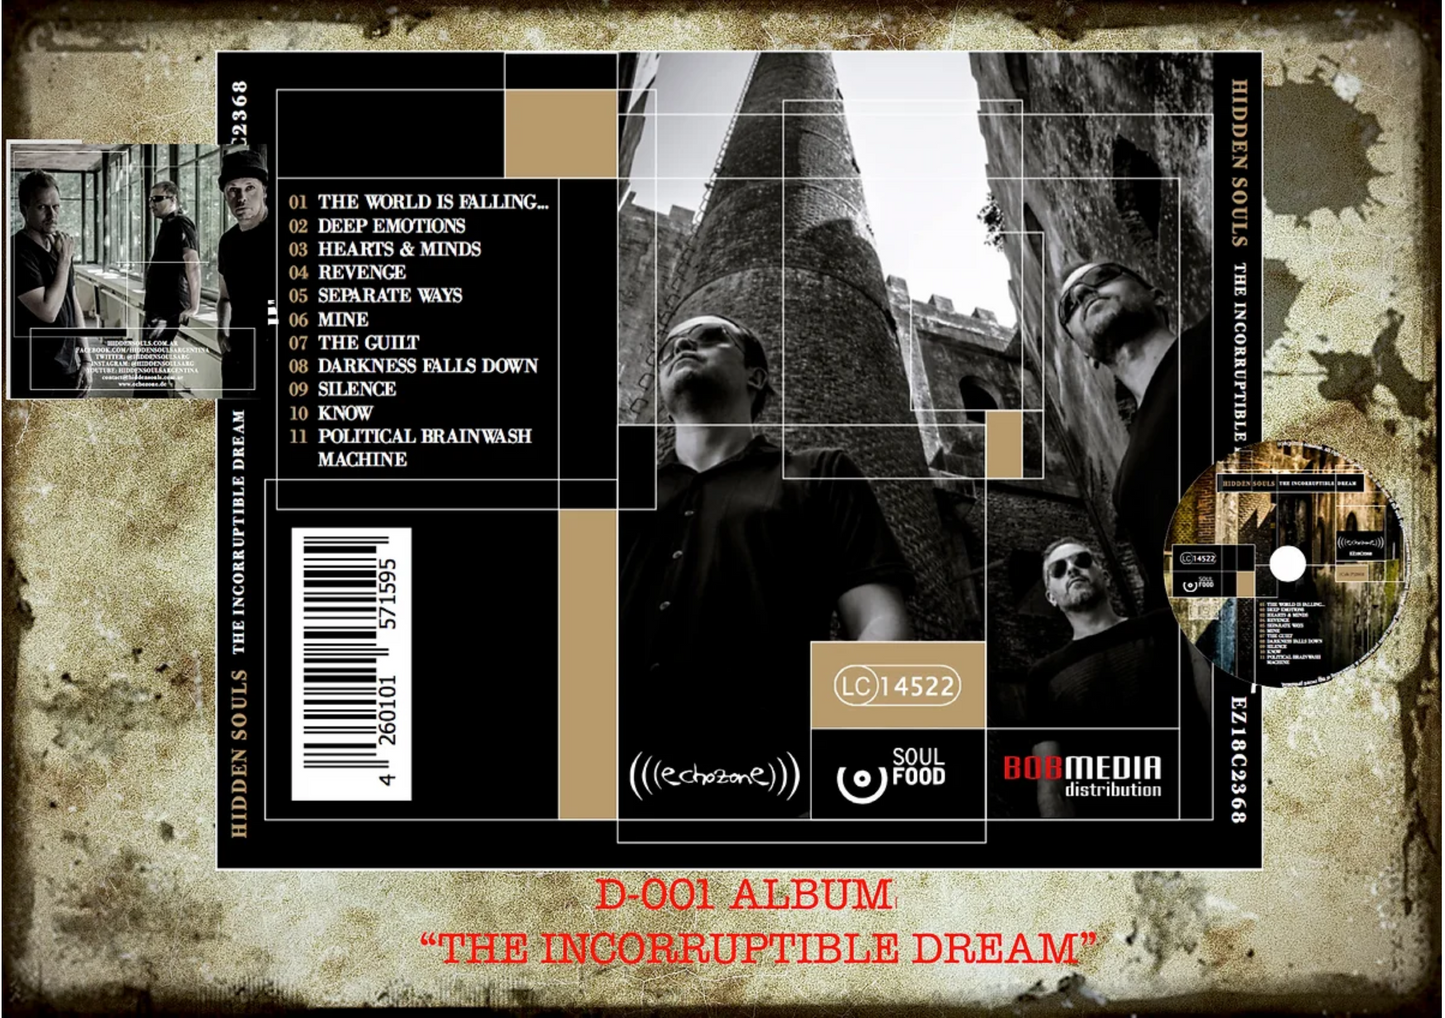 "The Incorruptible Dream" (CD Album) + Digital Download